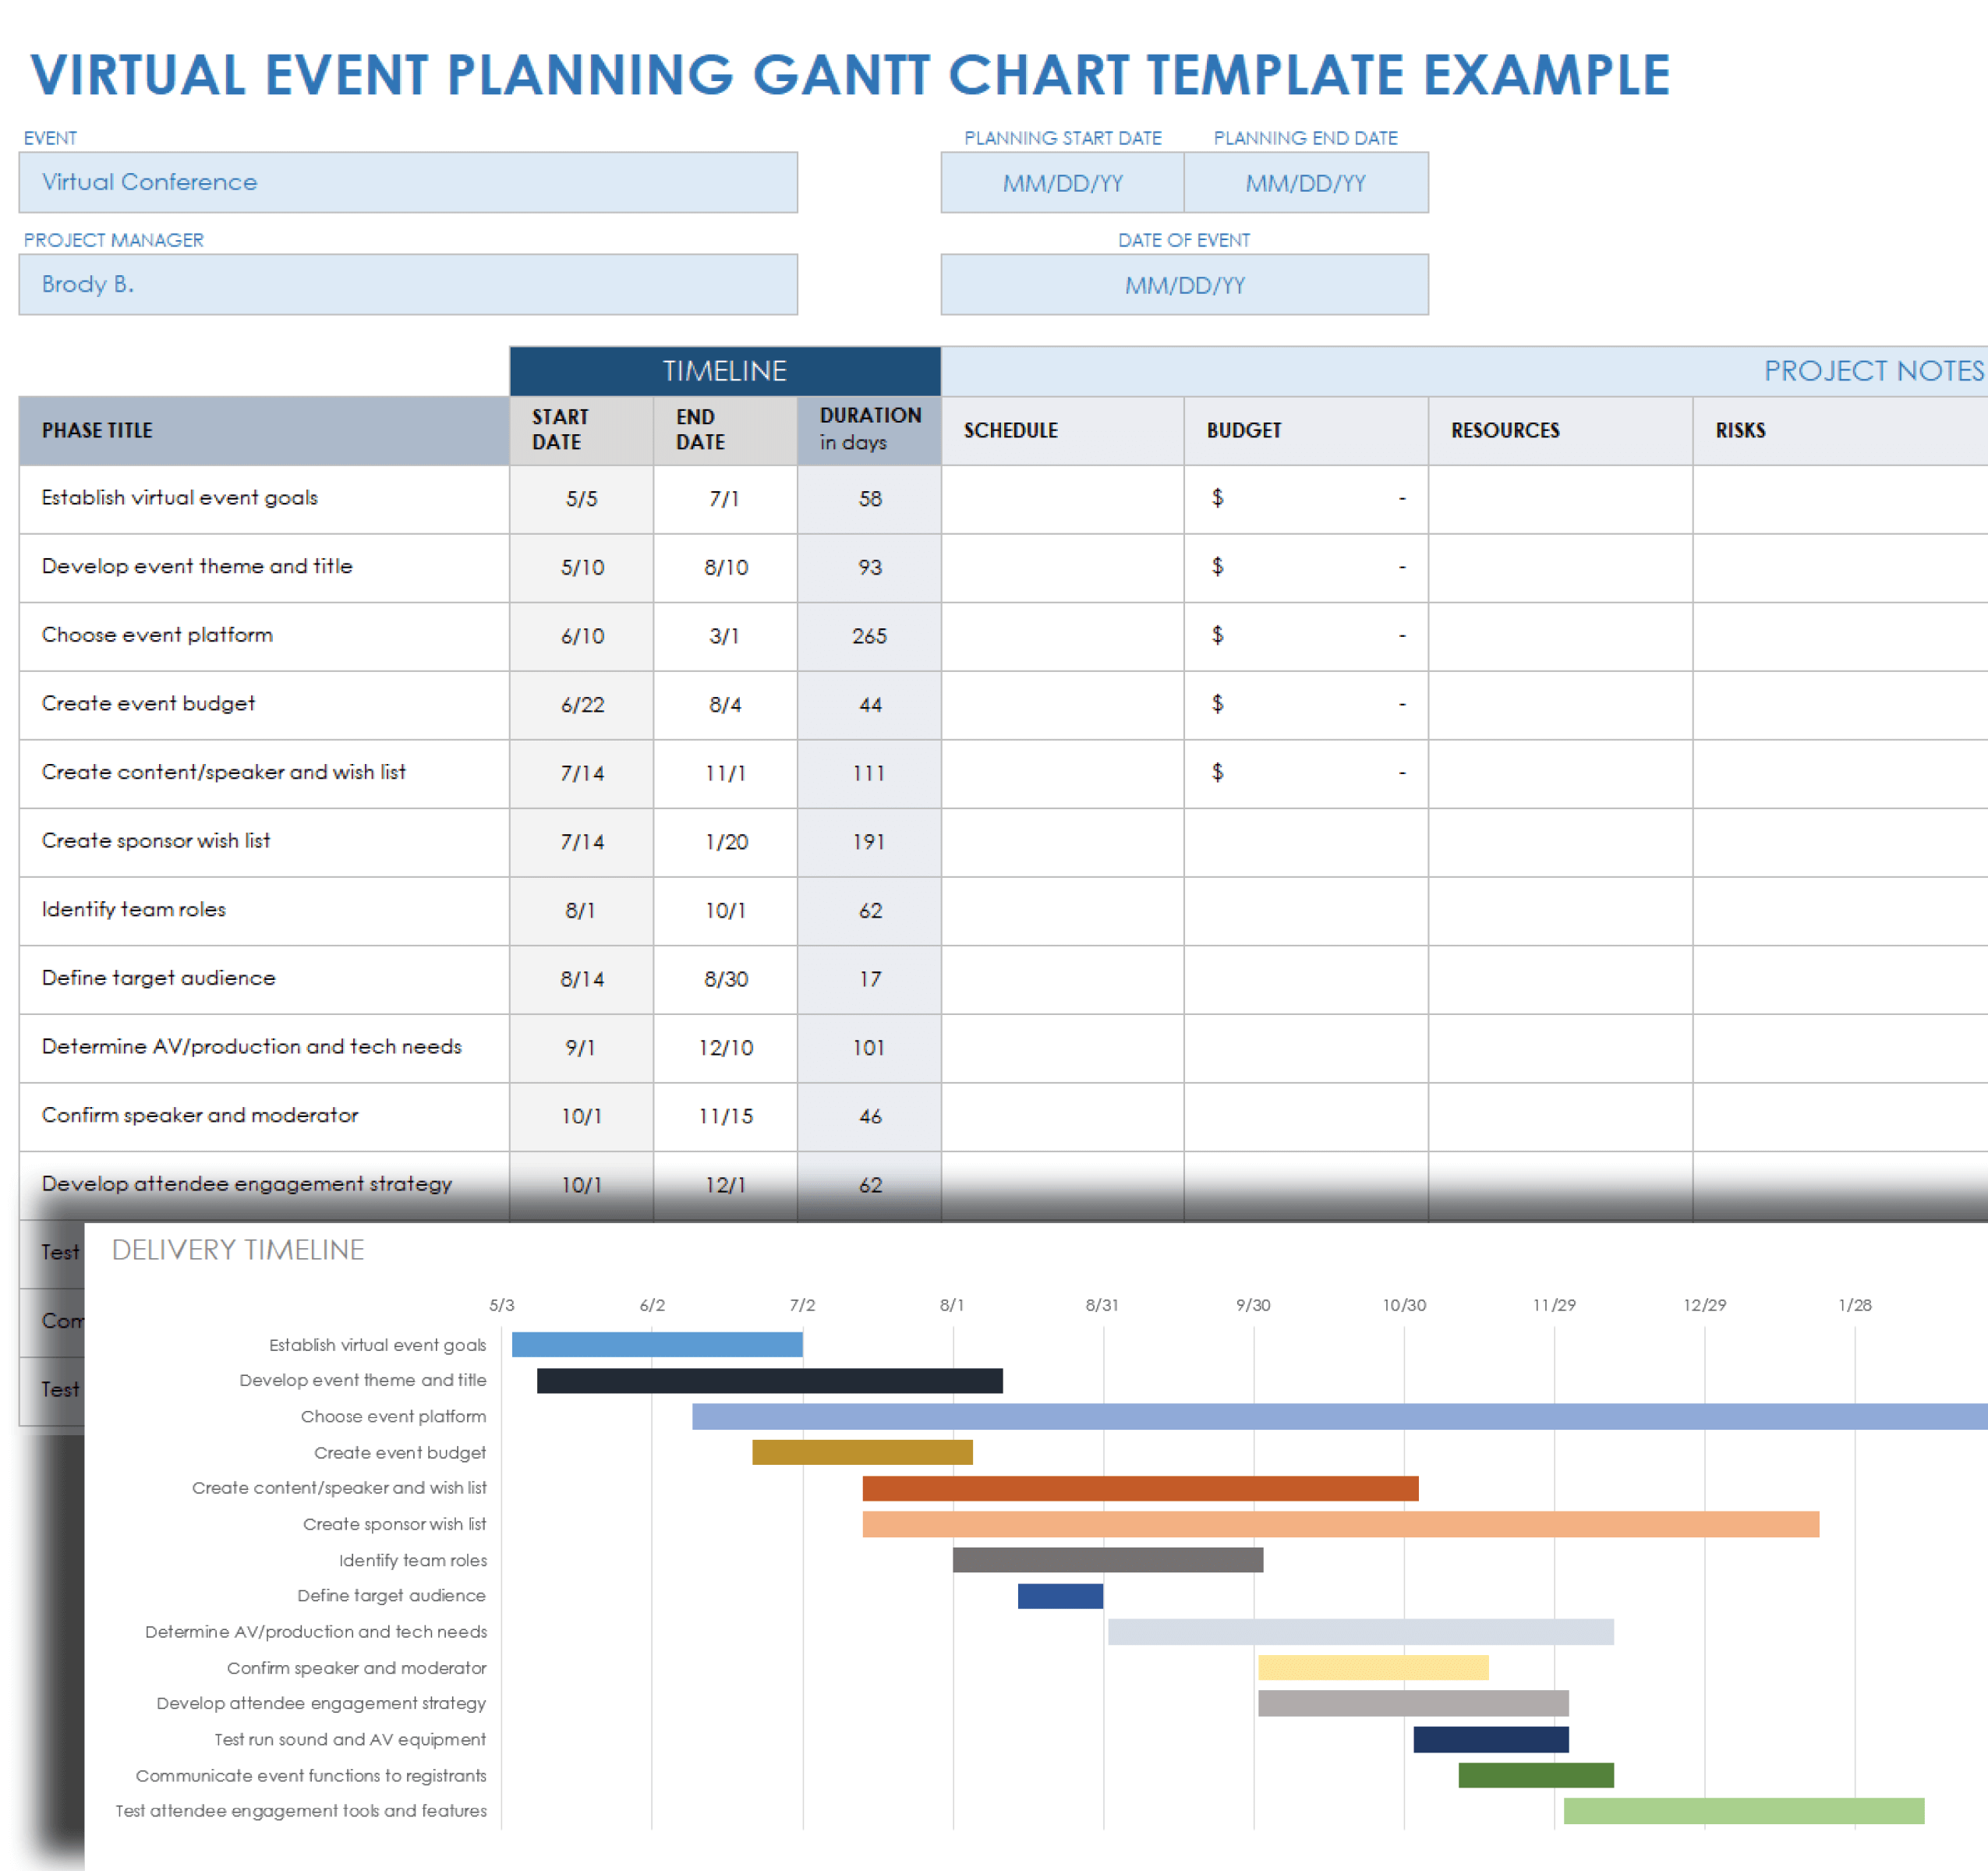 Virtual Event Planning Gantt Chart Template Example